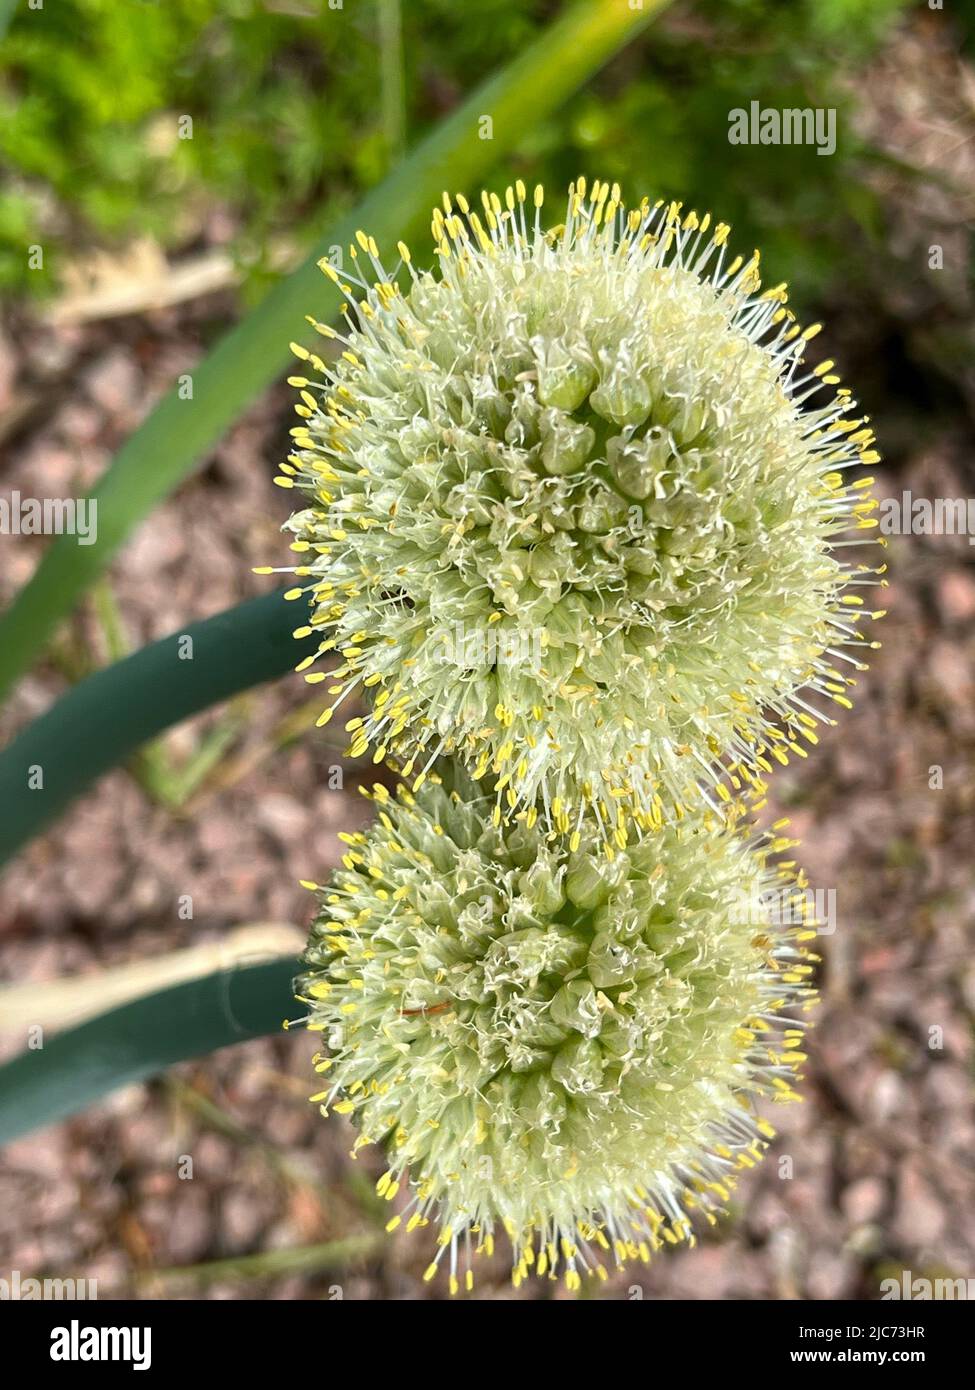 Oignon gallois - Allium fistulosum - Frühlingszwiebel - ciboule Banque D'Images